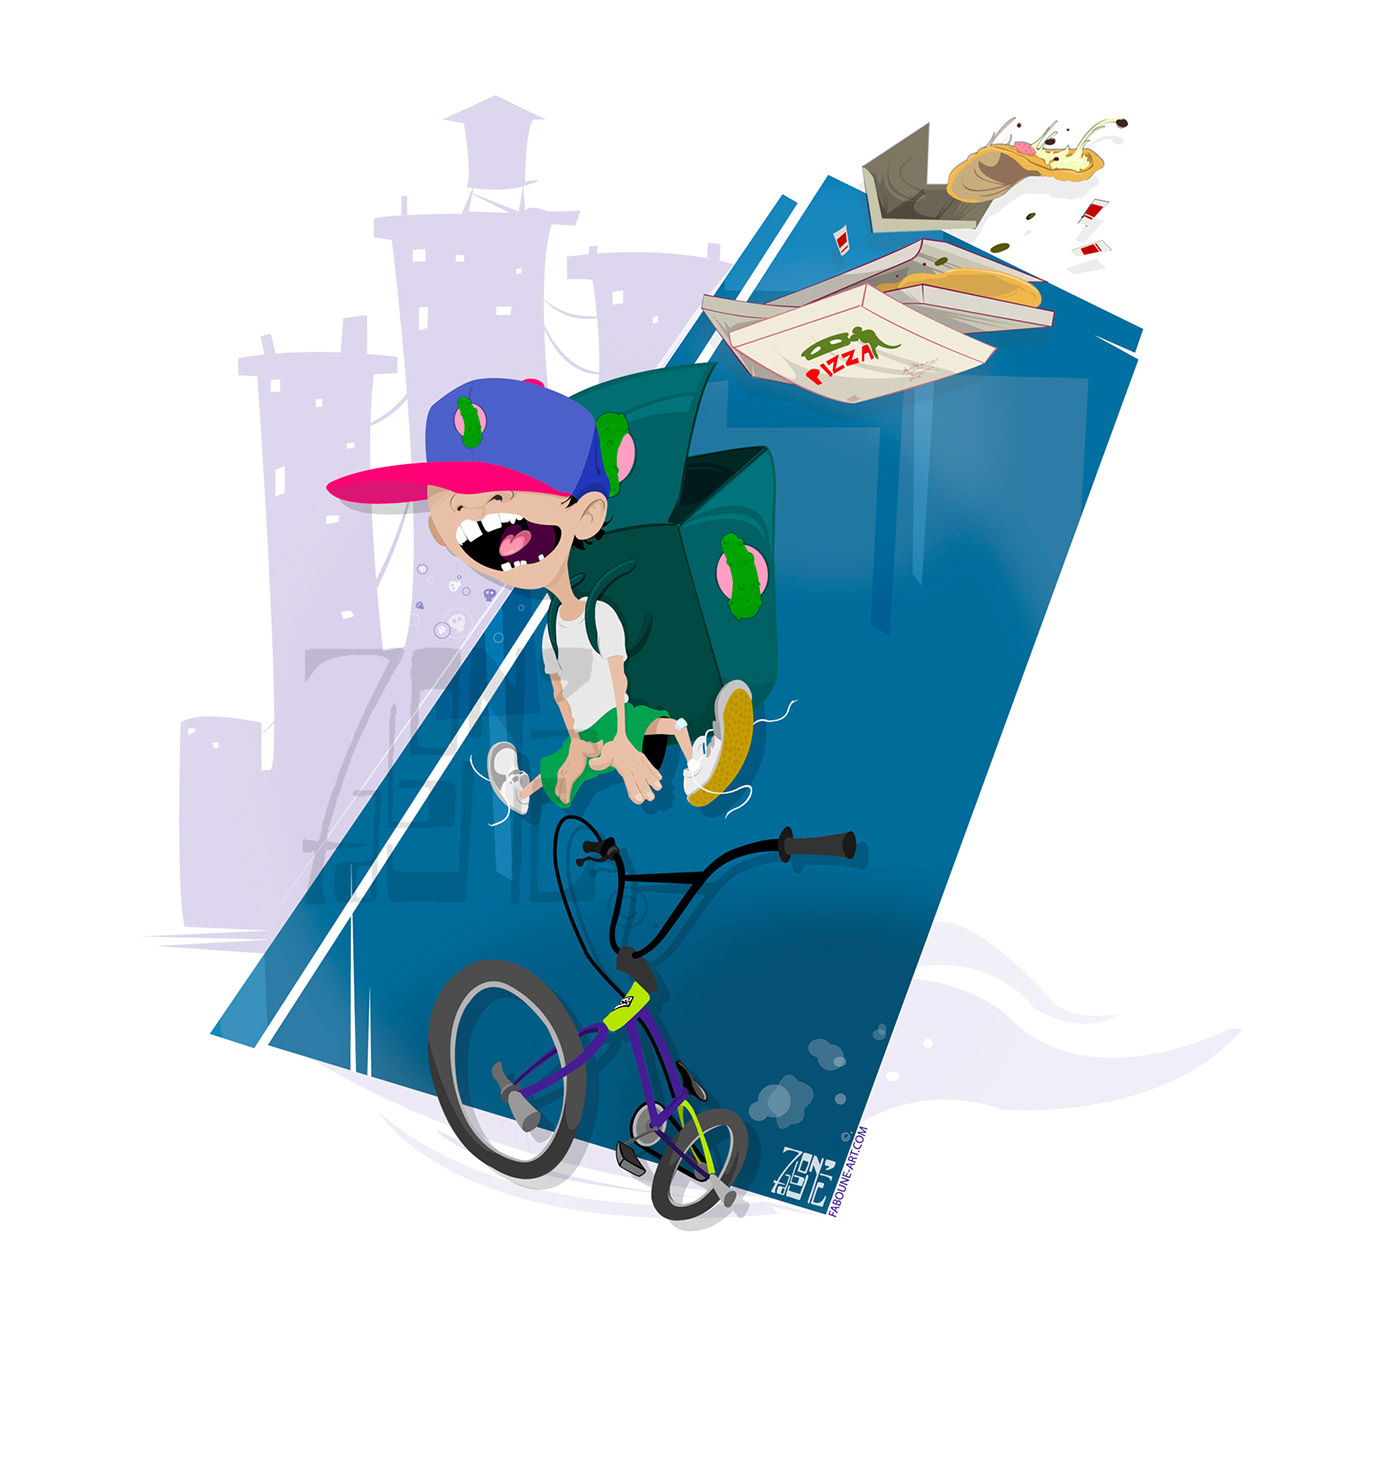 skate Bike skateboarding cartoon faboune gers Illustrateur auch Fun sudouest